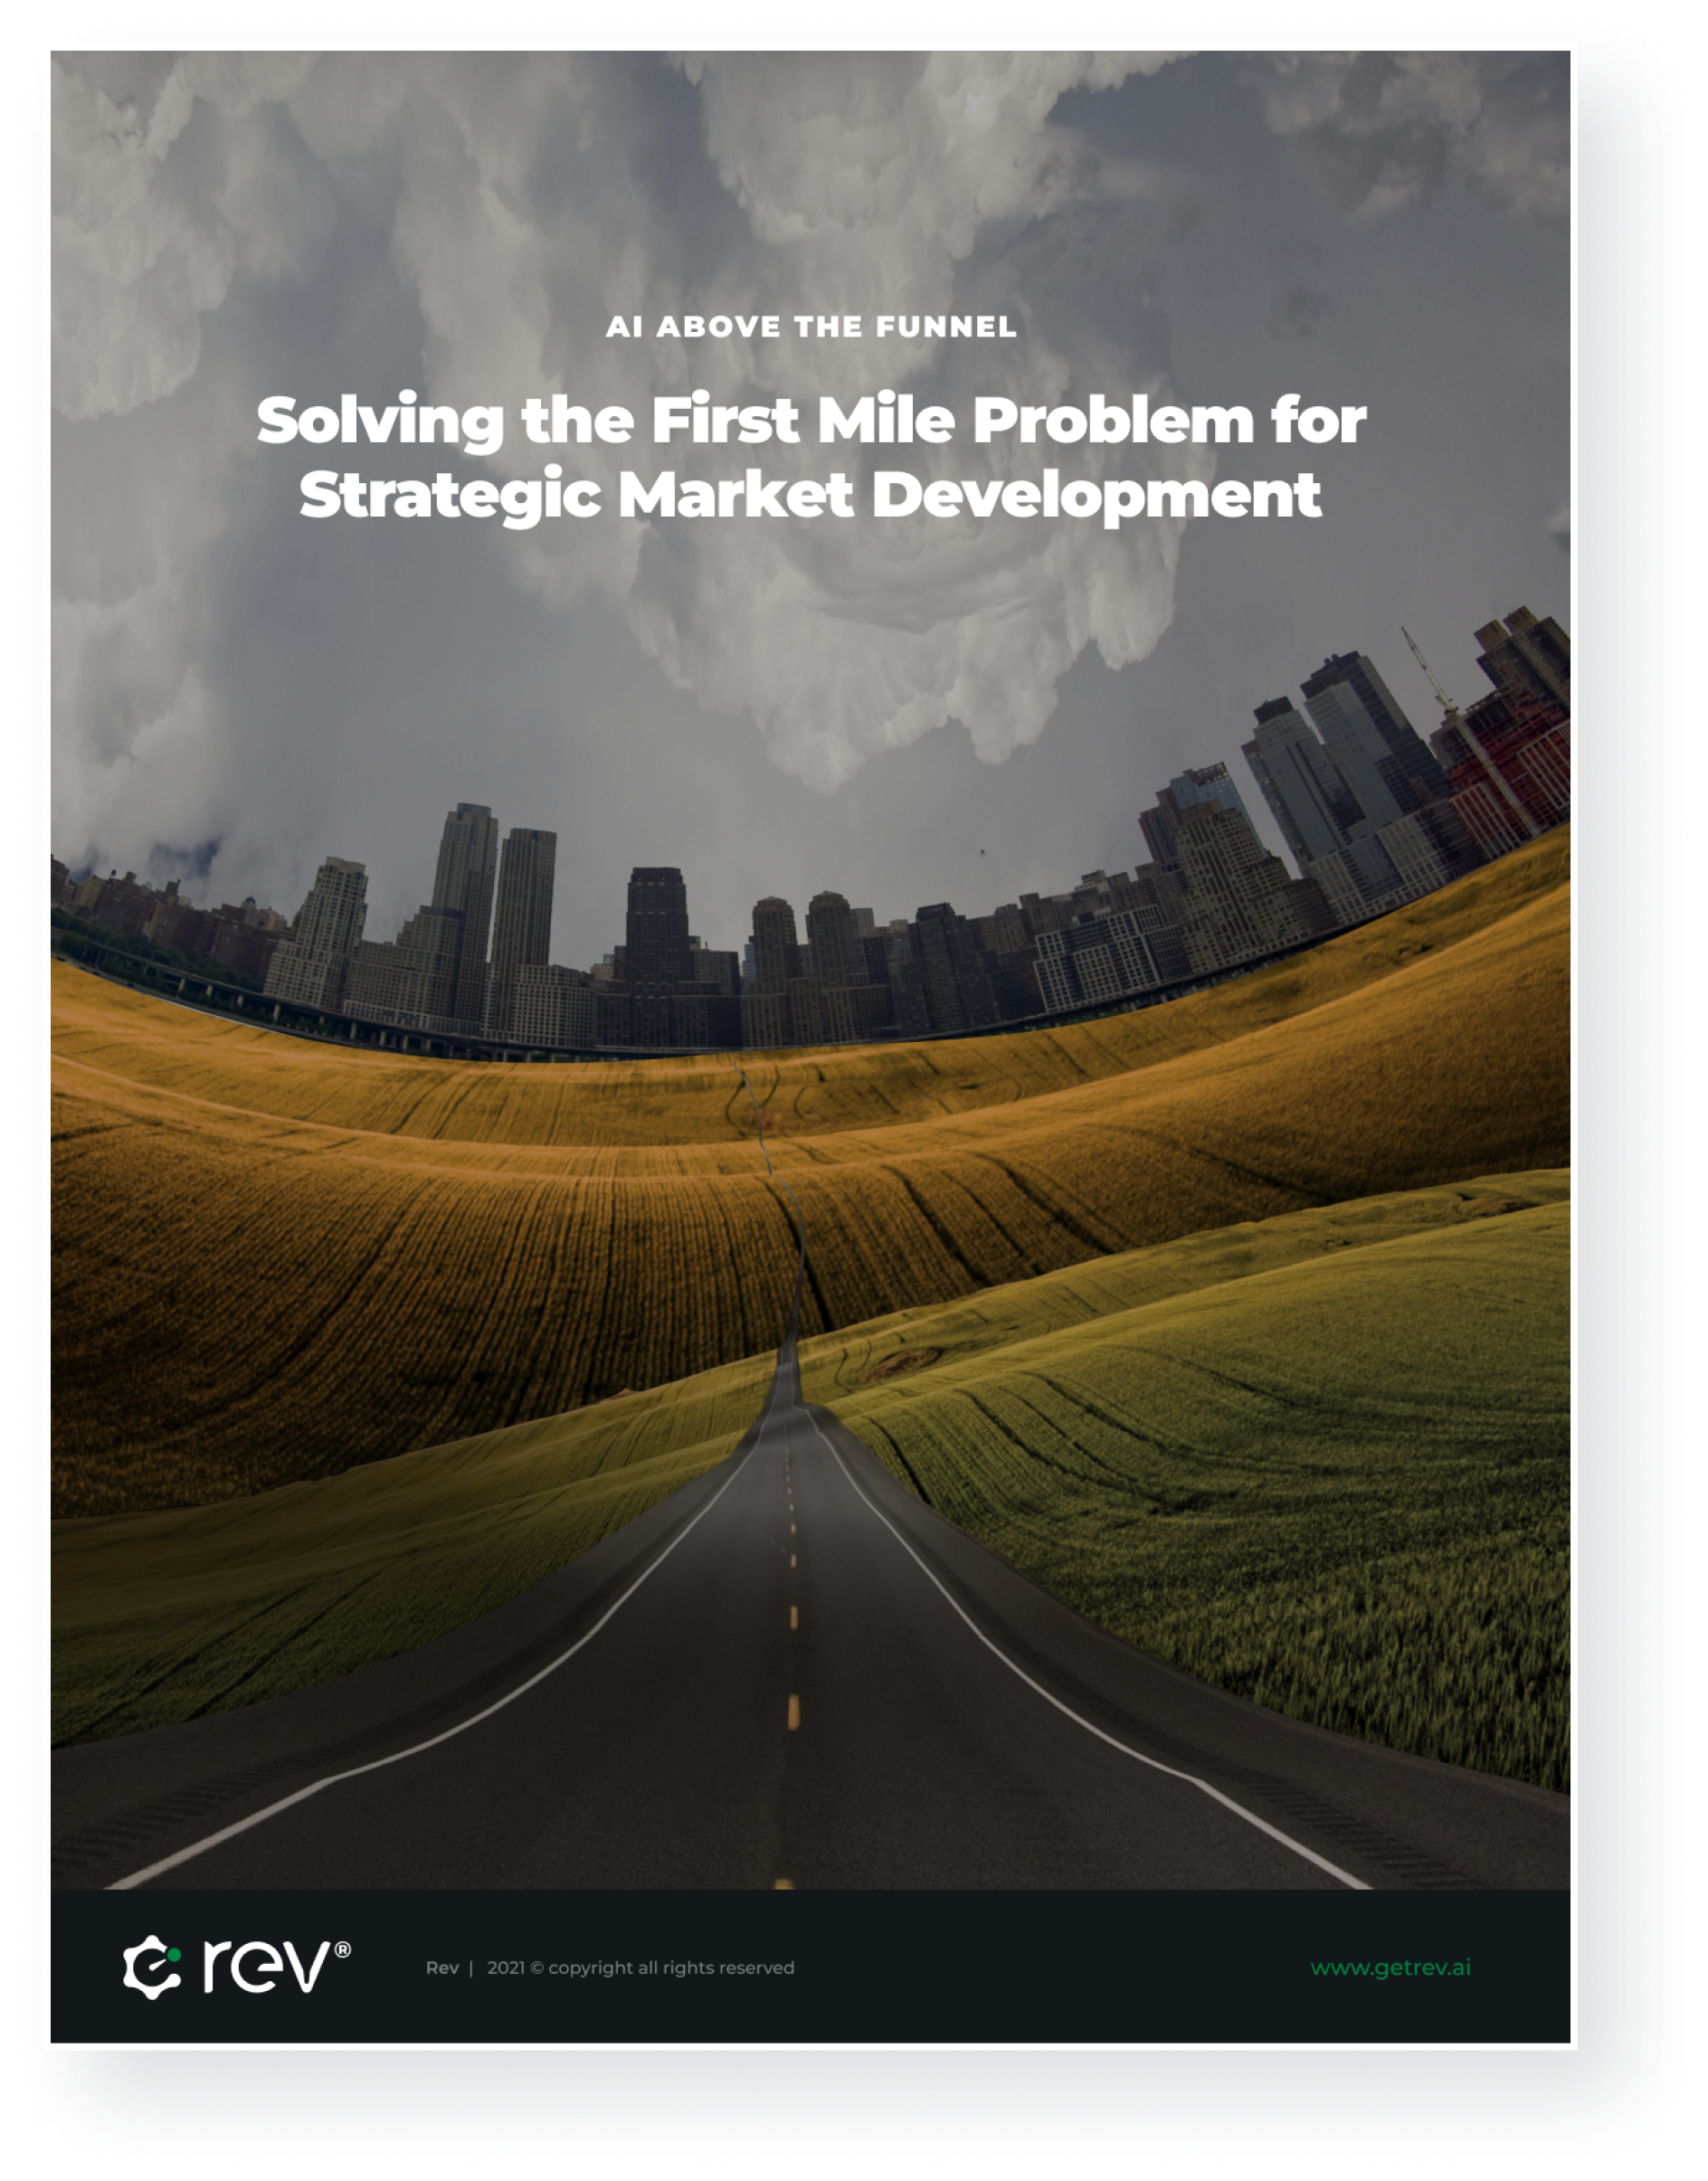 Solving the first-mile problem for strategic market development